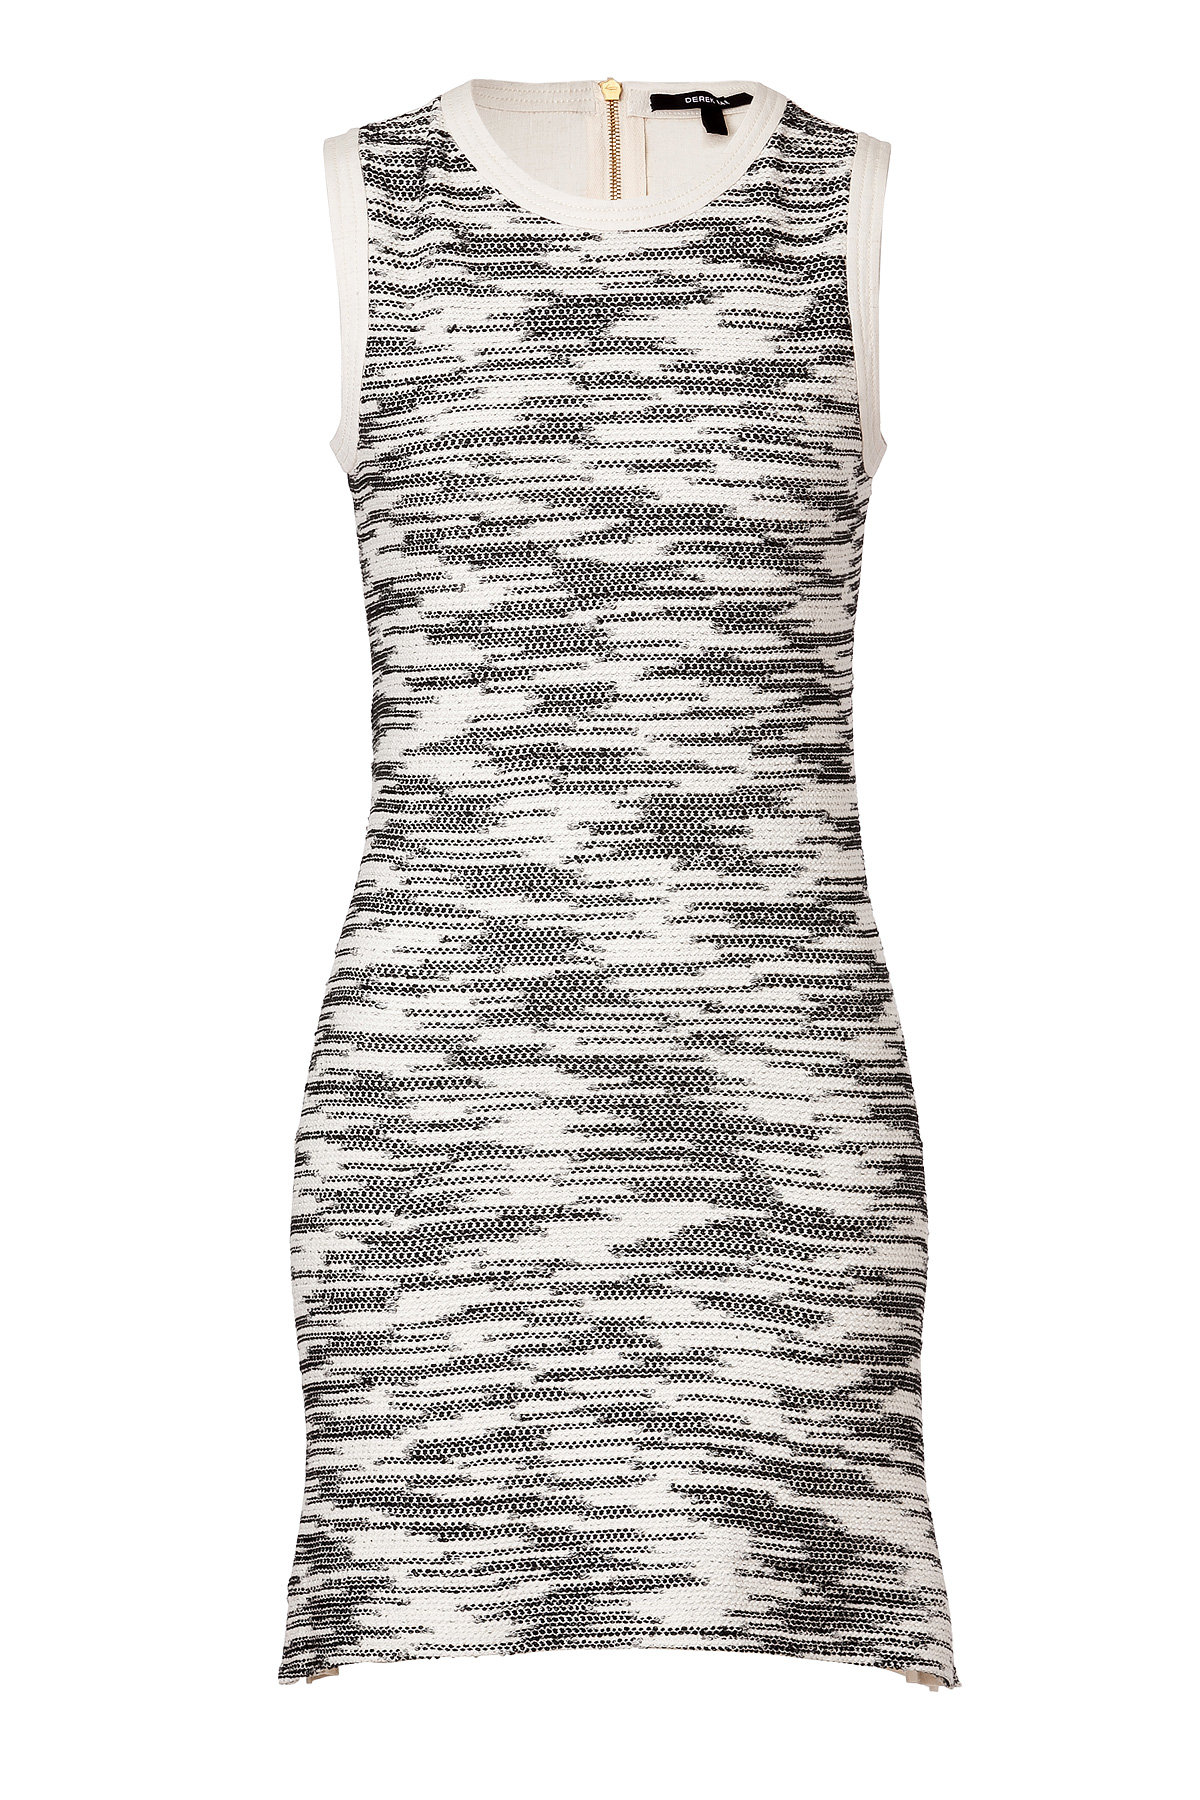 Derek Lam - Cotton Blend Flared Dress in Black/White